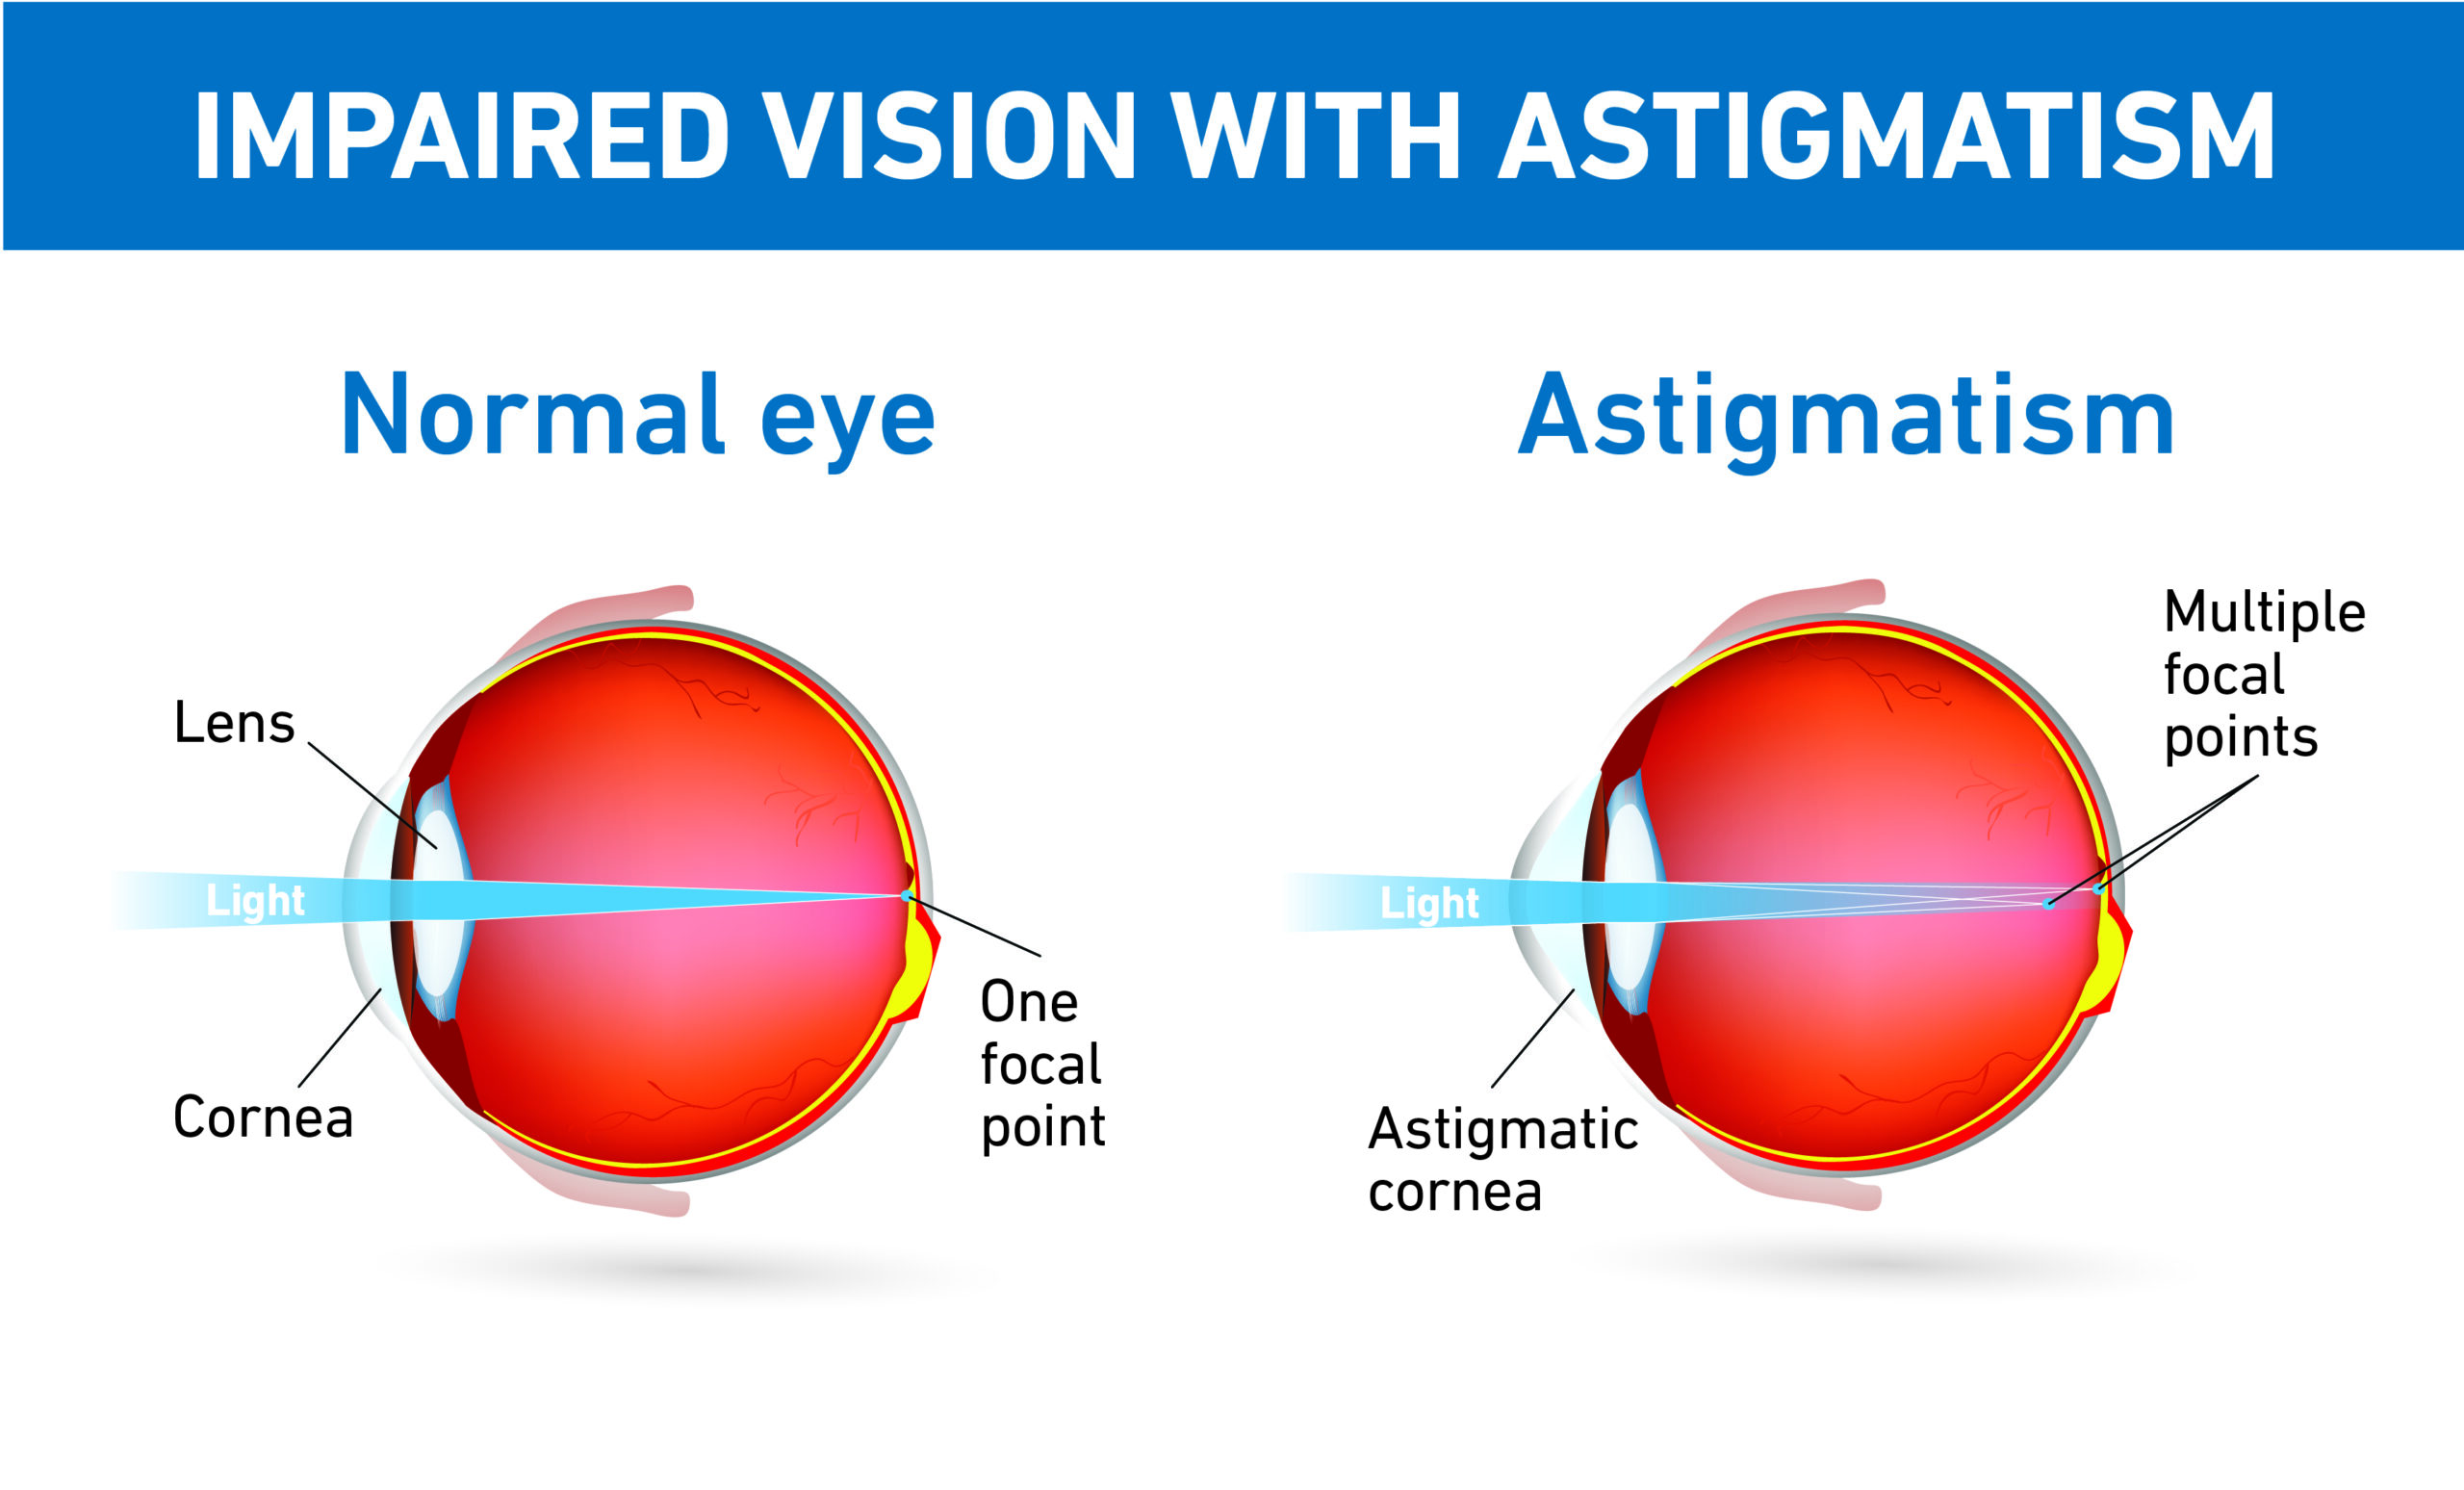 Lasik corrija astigmatismo?